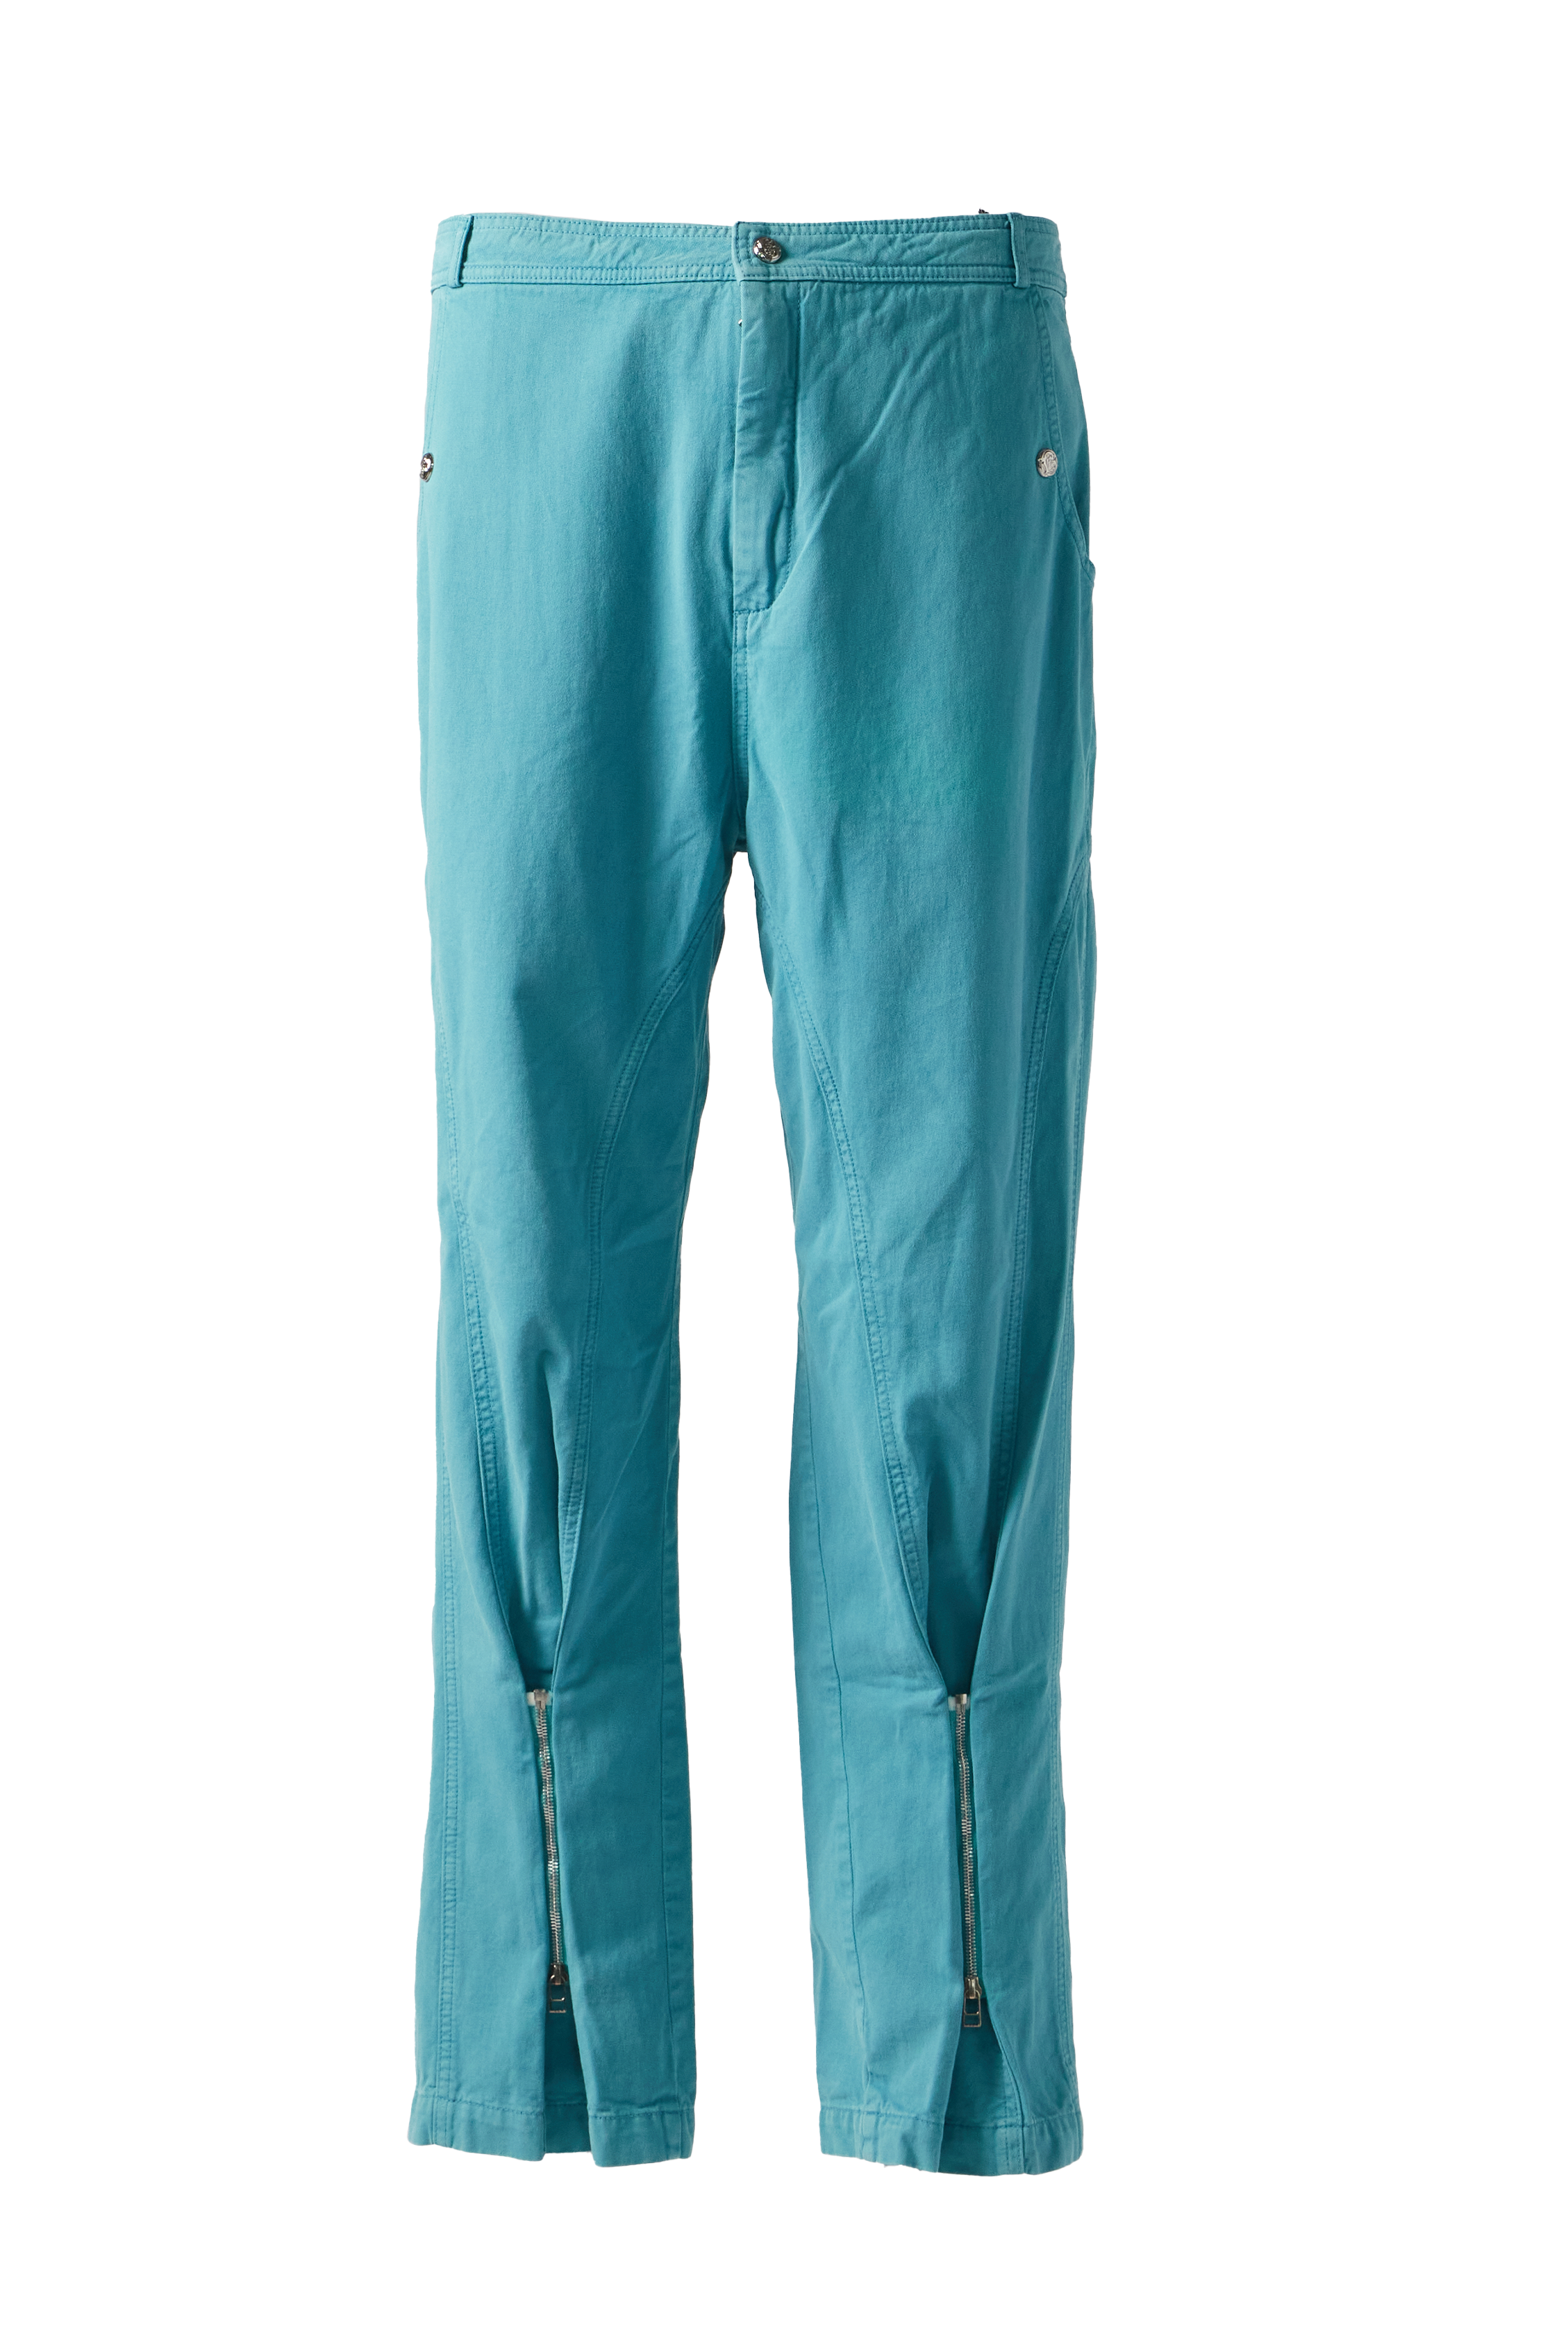 BLUEMARBLE - Zipped Dart Pants product image